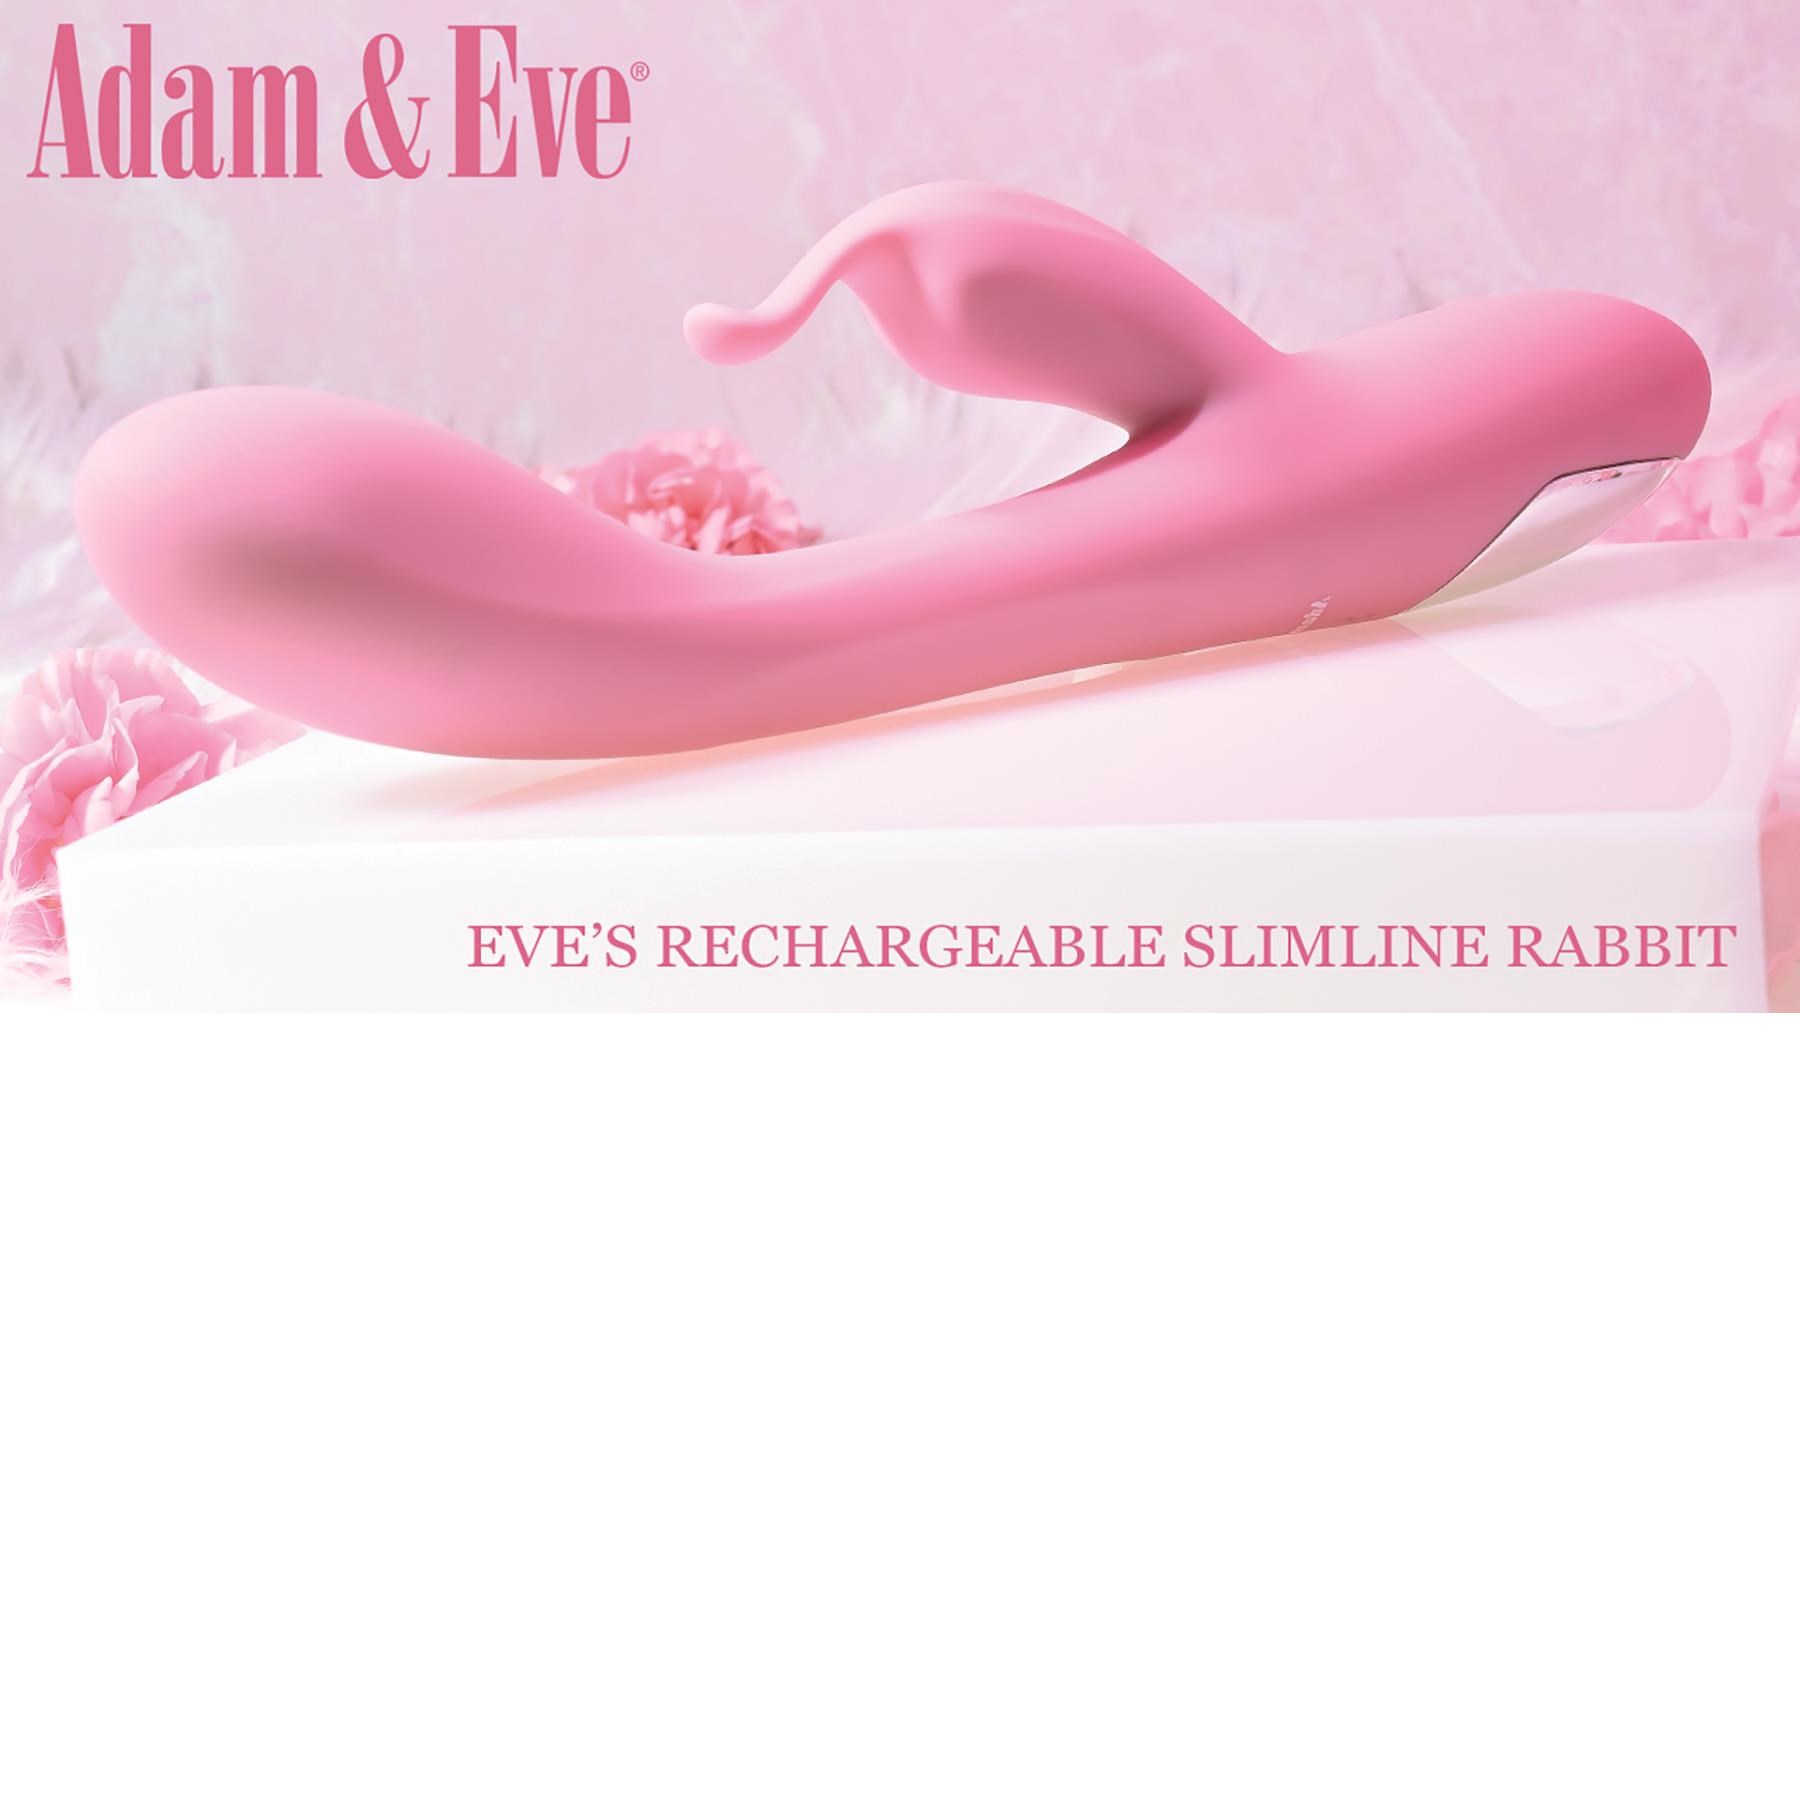 Eve's Rechargeable Slimline Rabbit - Lifestyle Image